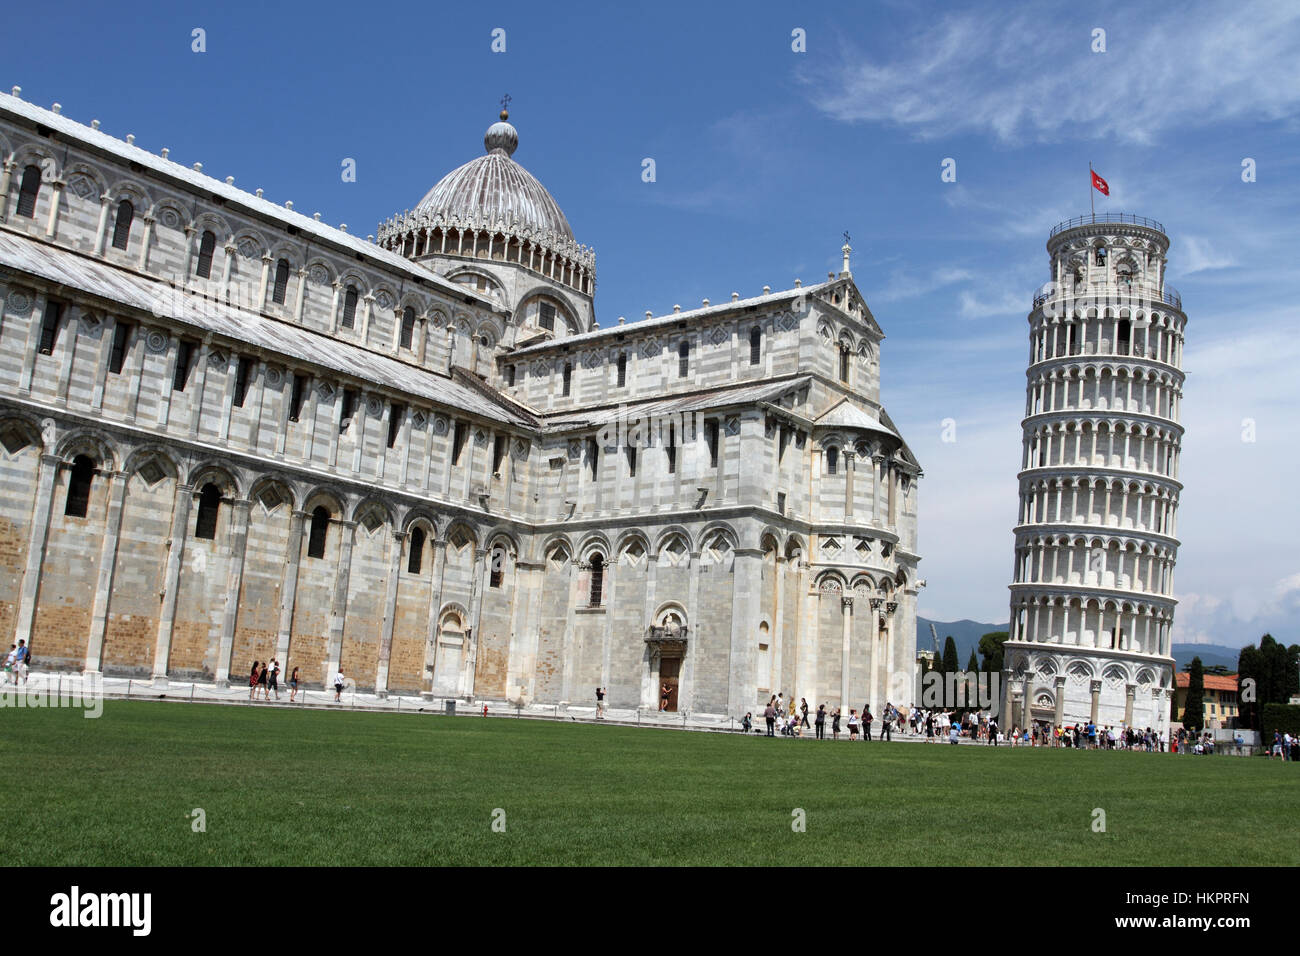 Pisa tower in Campo dei Miracoli, Italy Stock Photo